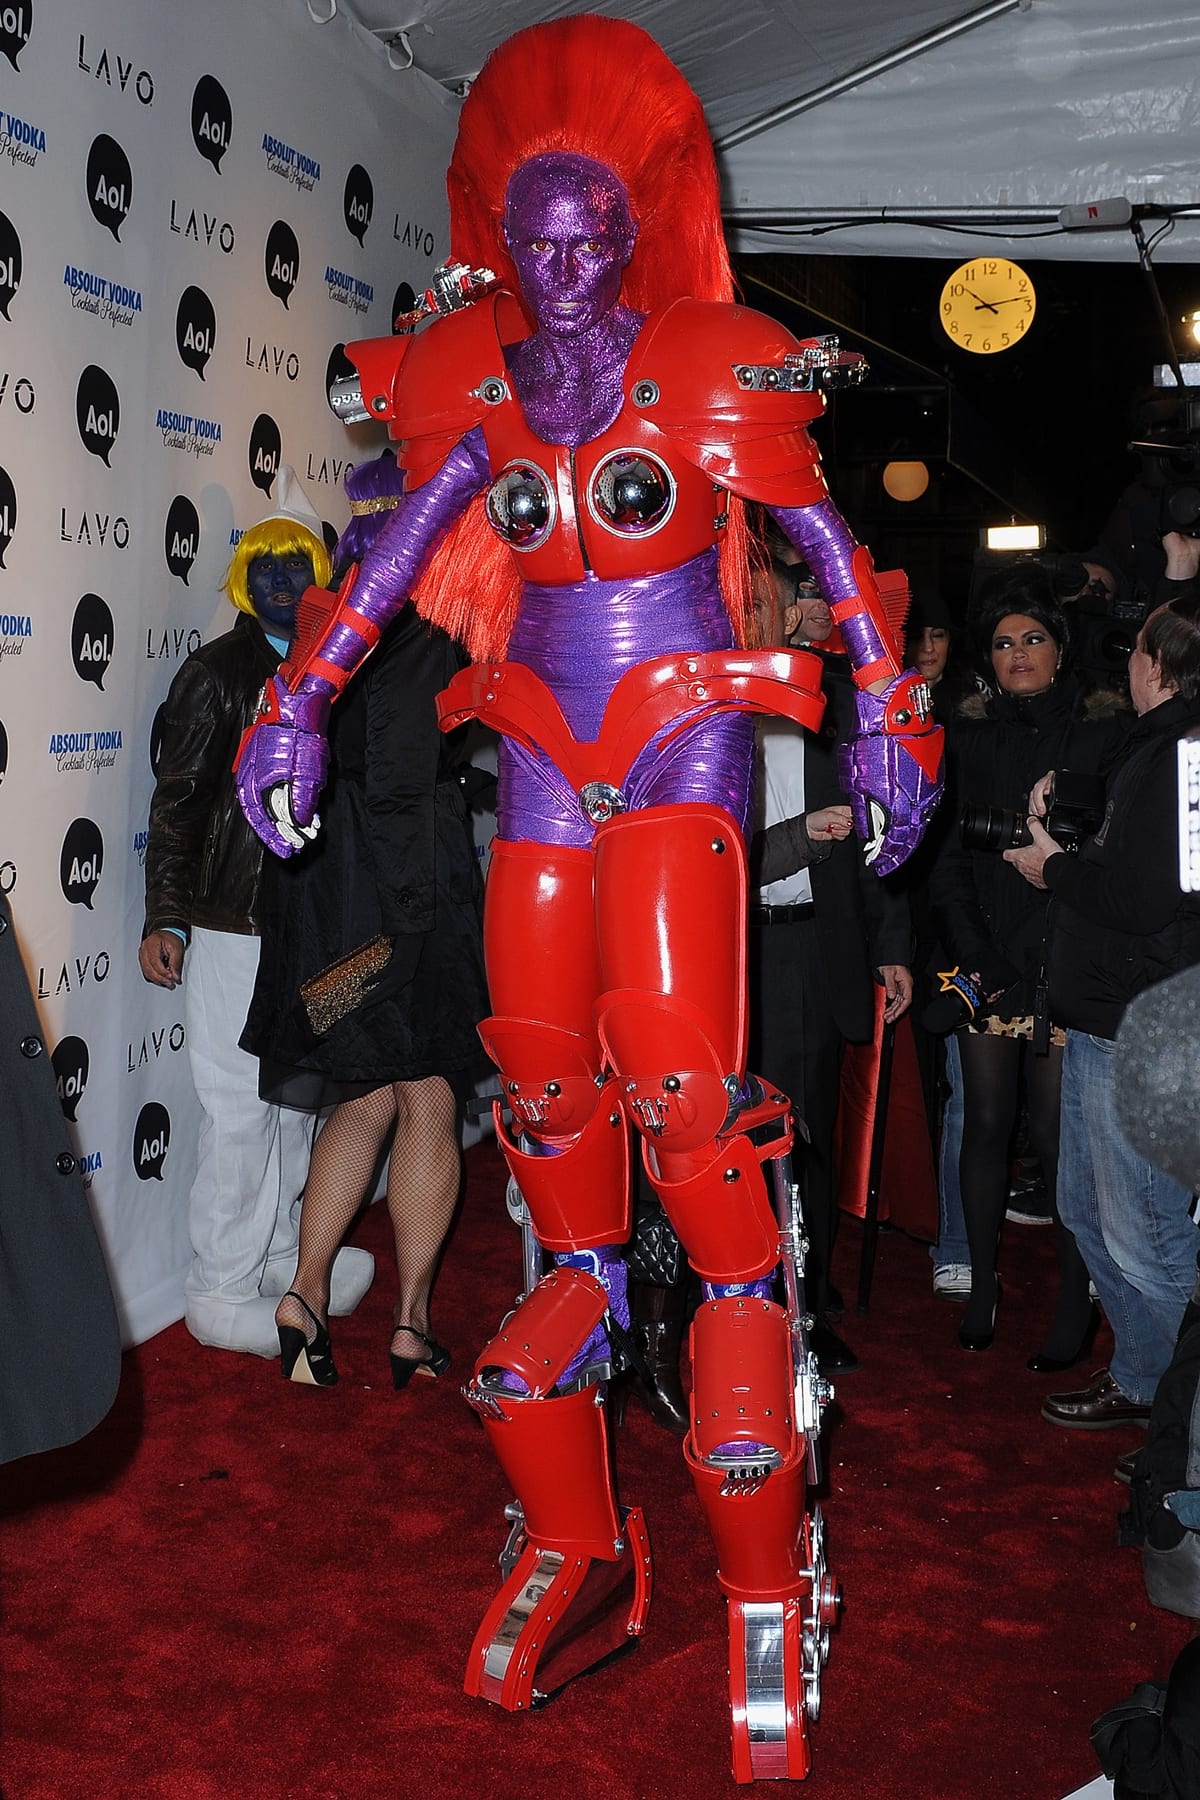 Heidi Klum dressed as a red and purple robot at Heidi Klum's Halloween Party